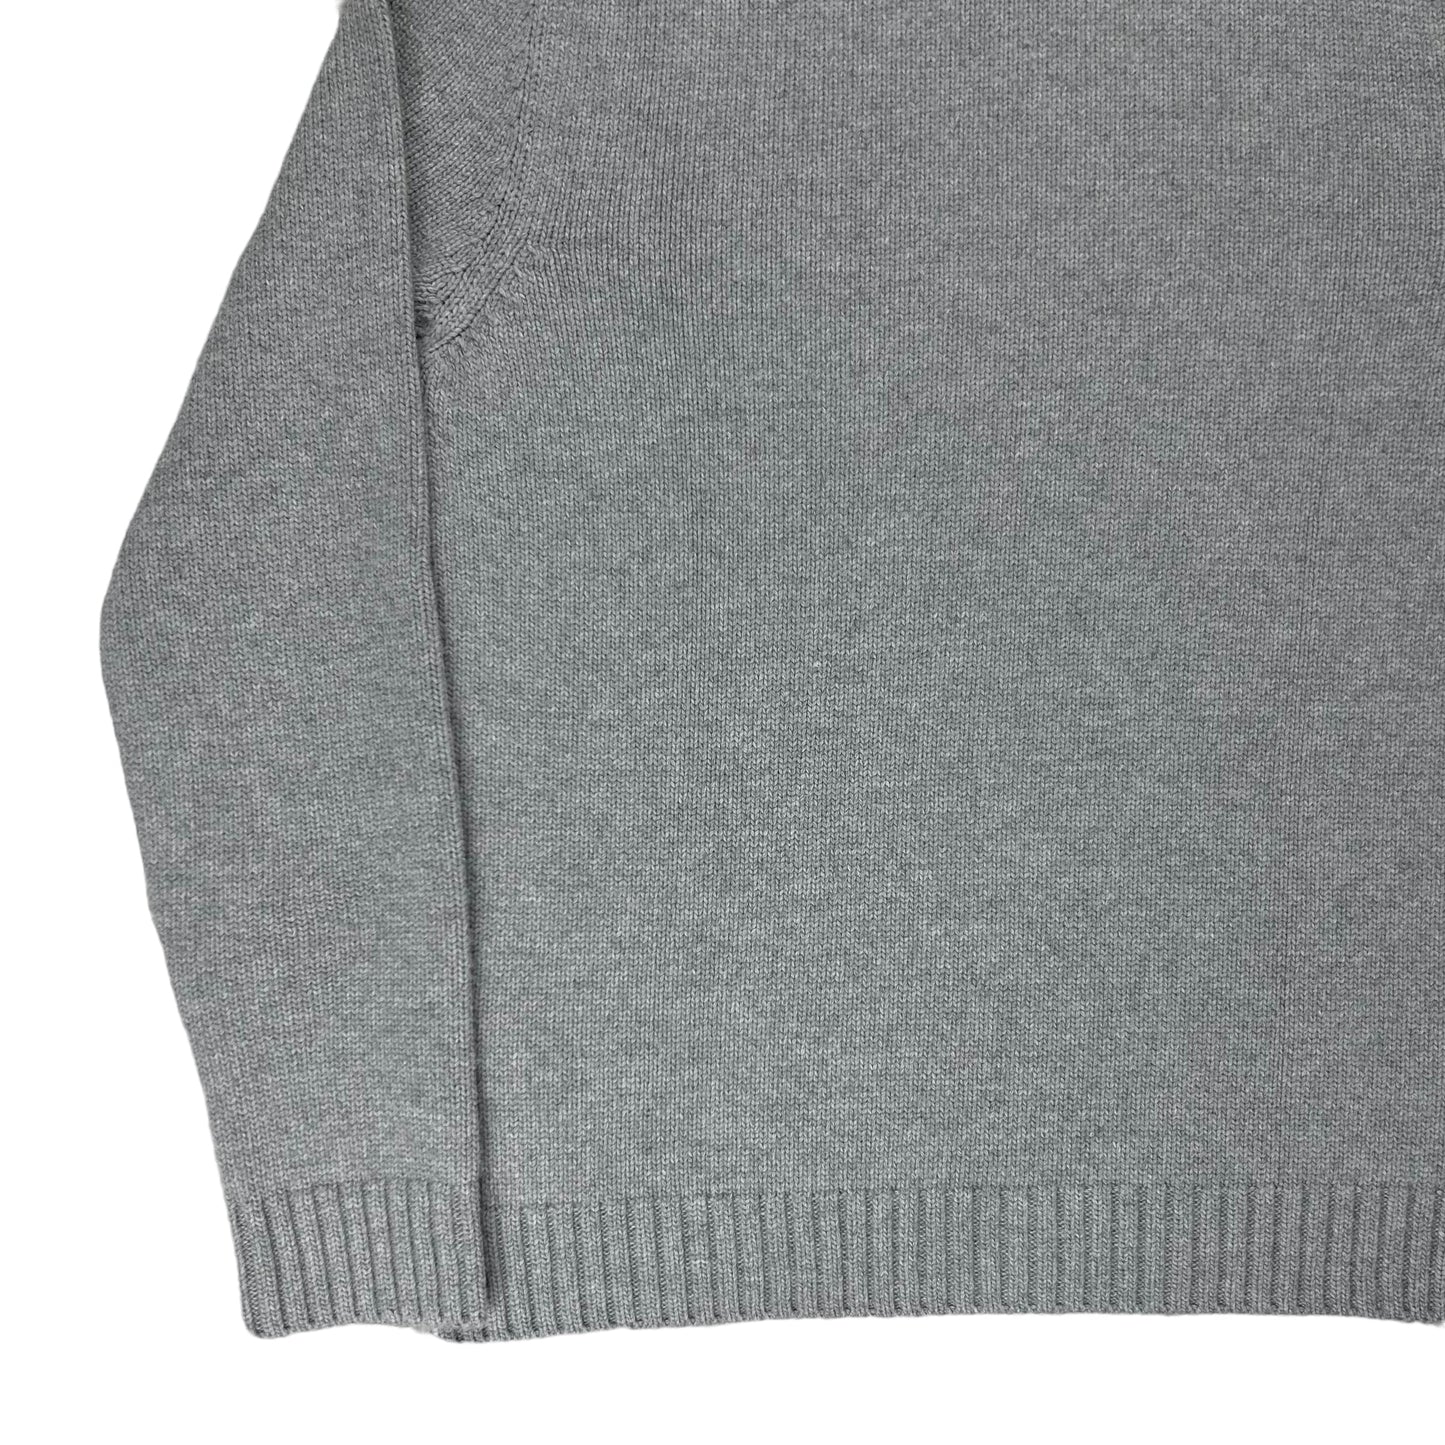 Jil Sander Cross Stripe Cashmere Knit Sweater - AW13